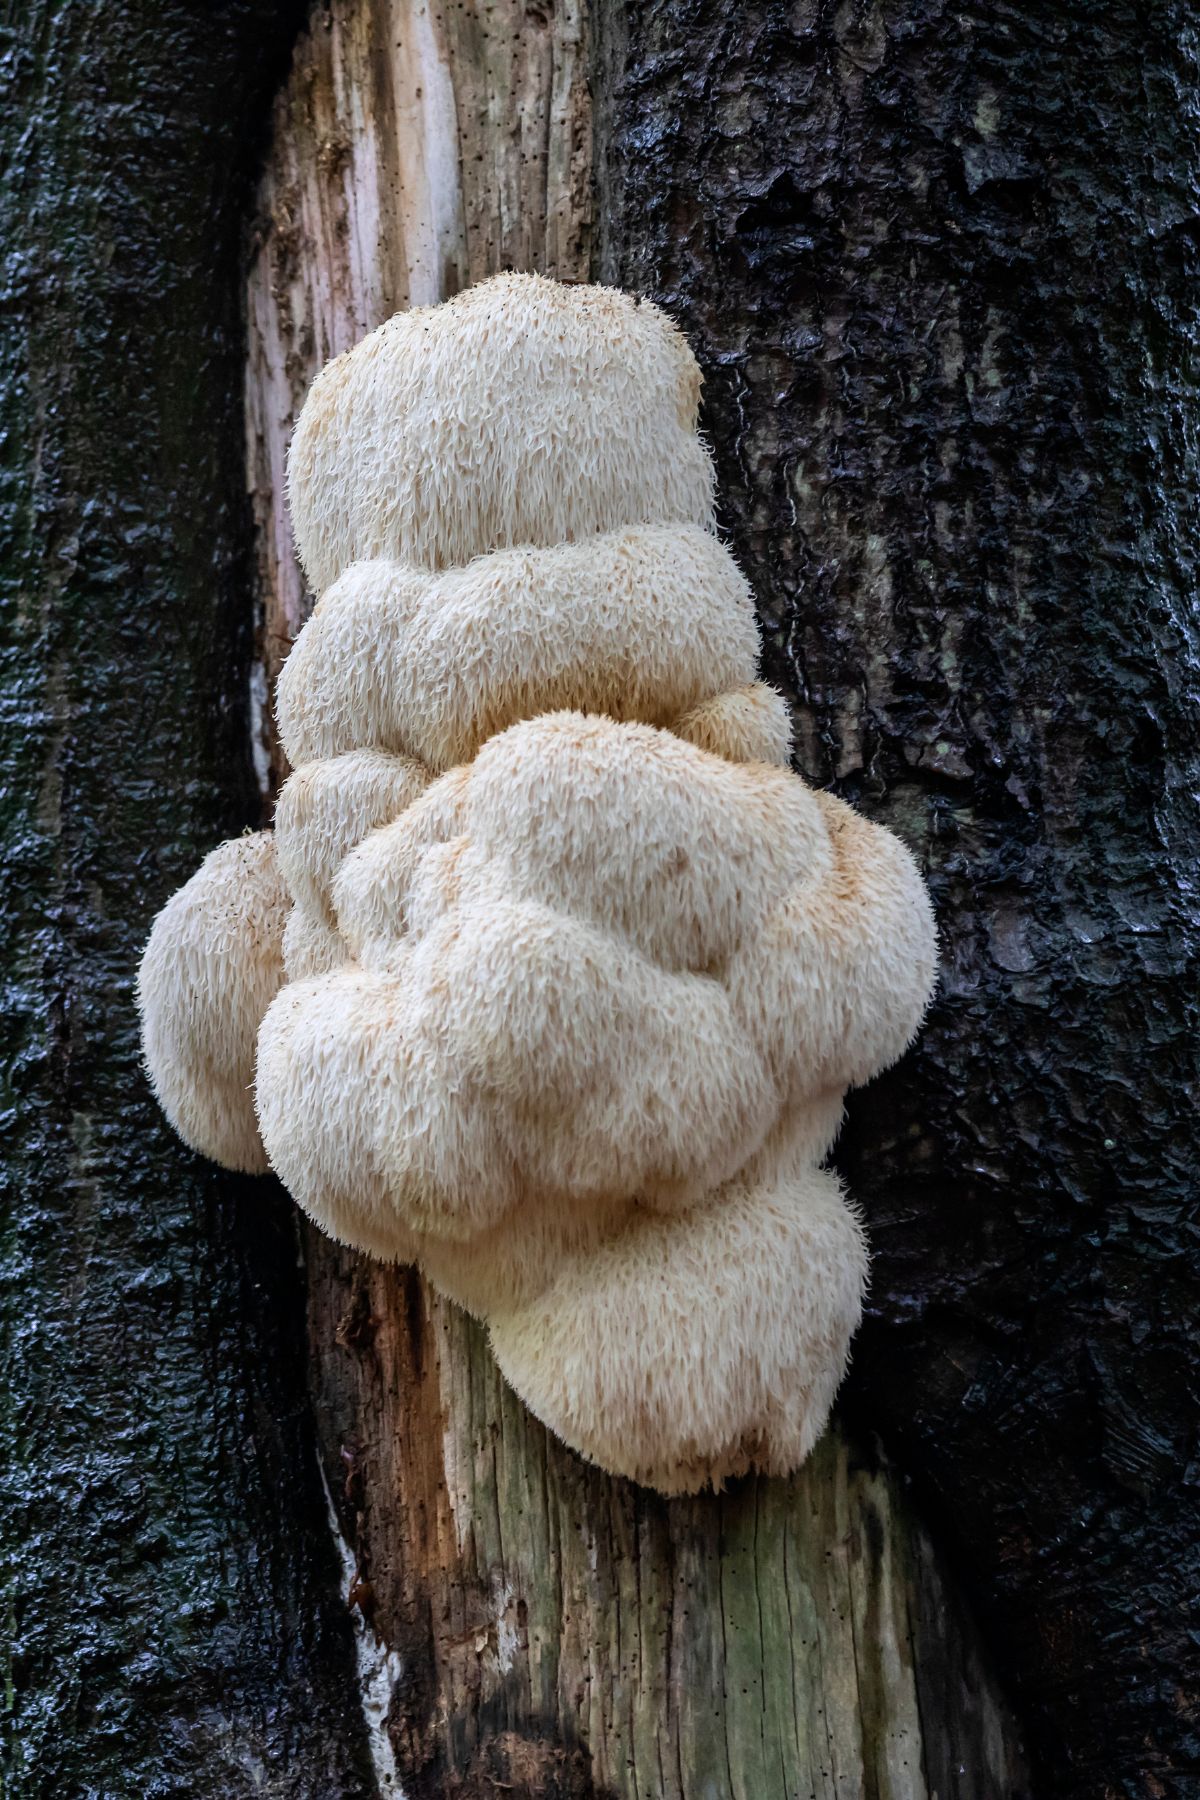 Lion's Mane mushrooms growing on a tree.